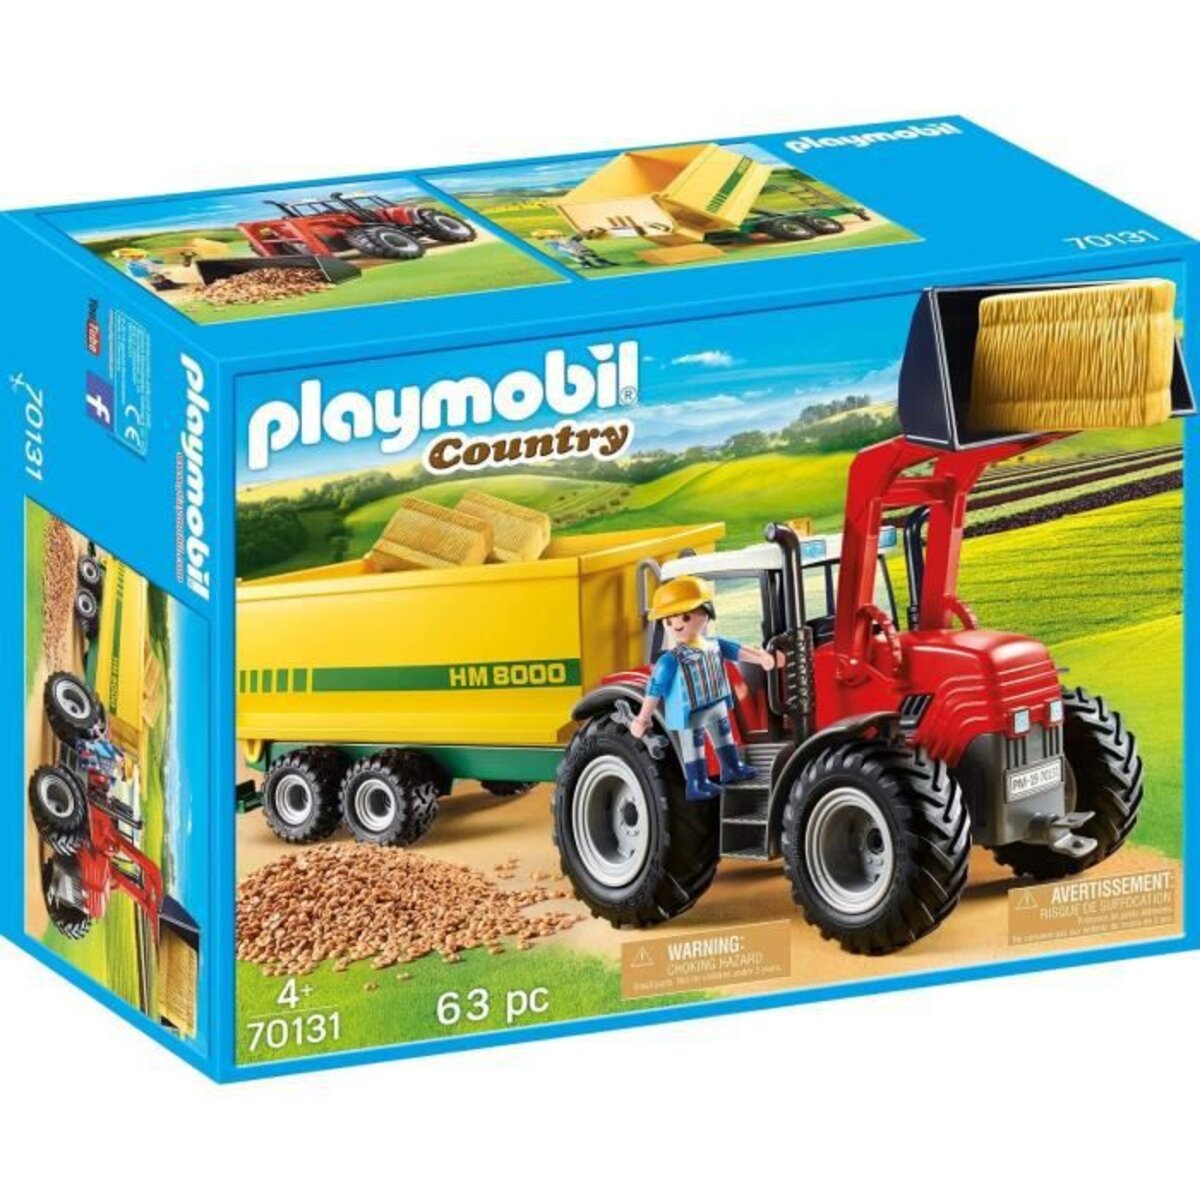 PLAYMOBIL grand tracteur PlayMobil Country